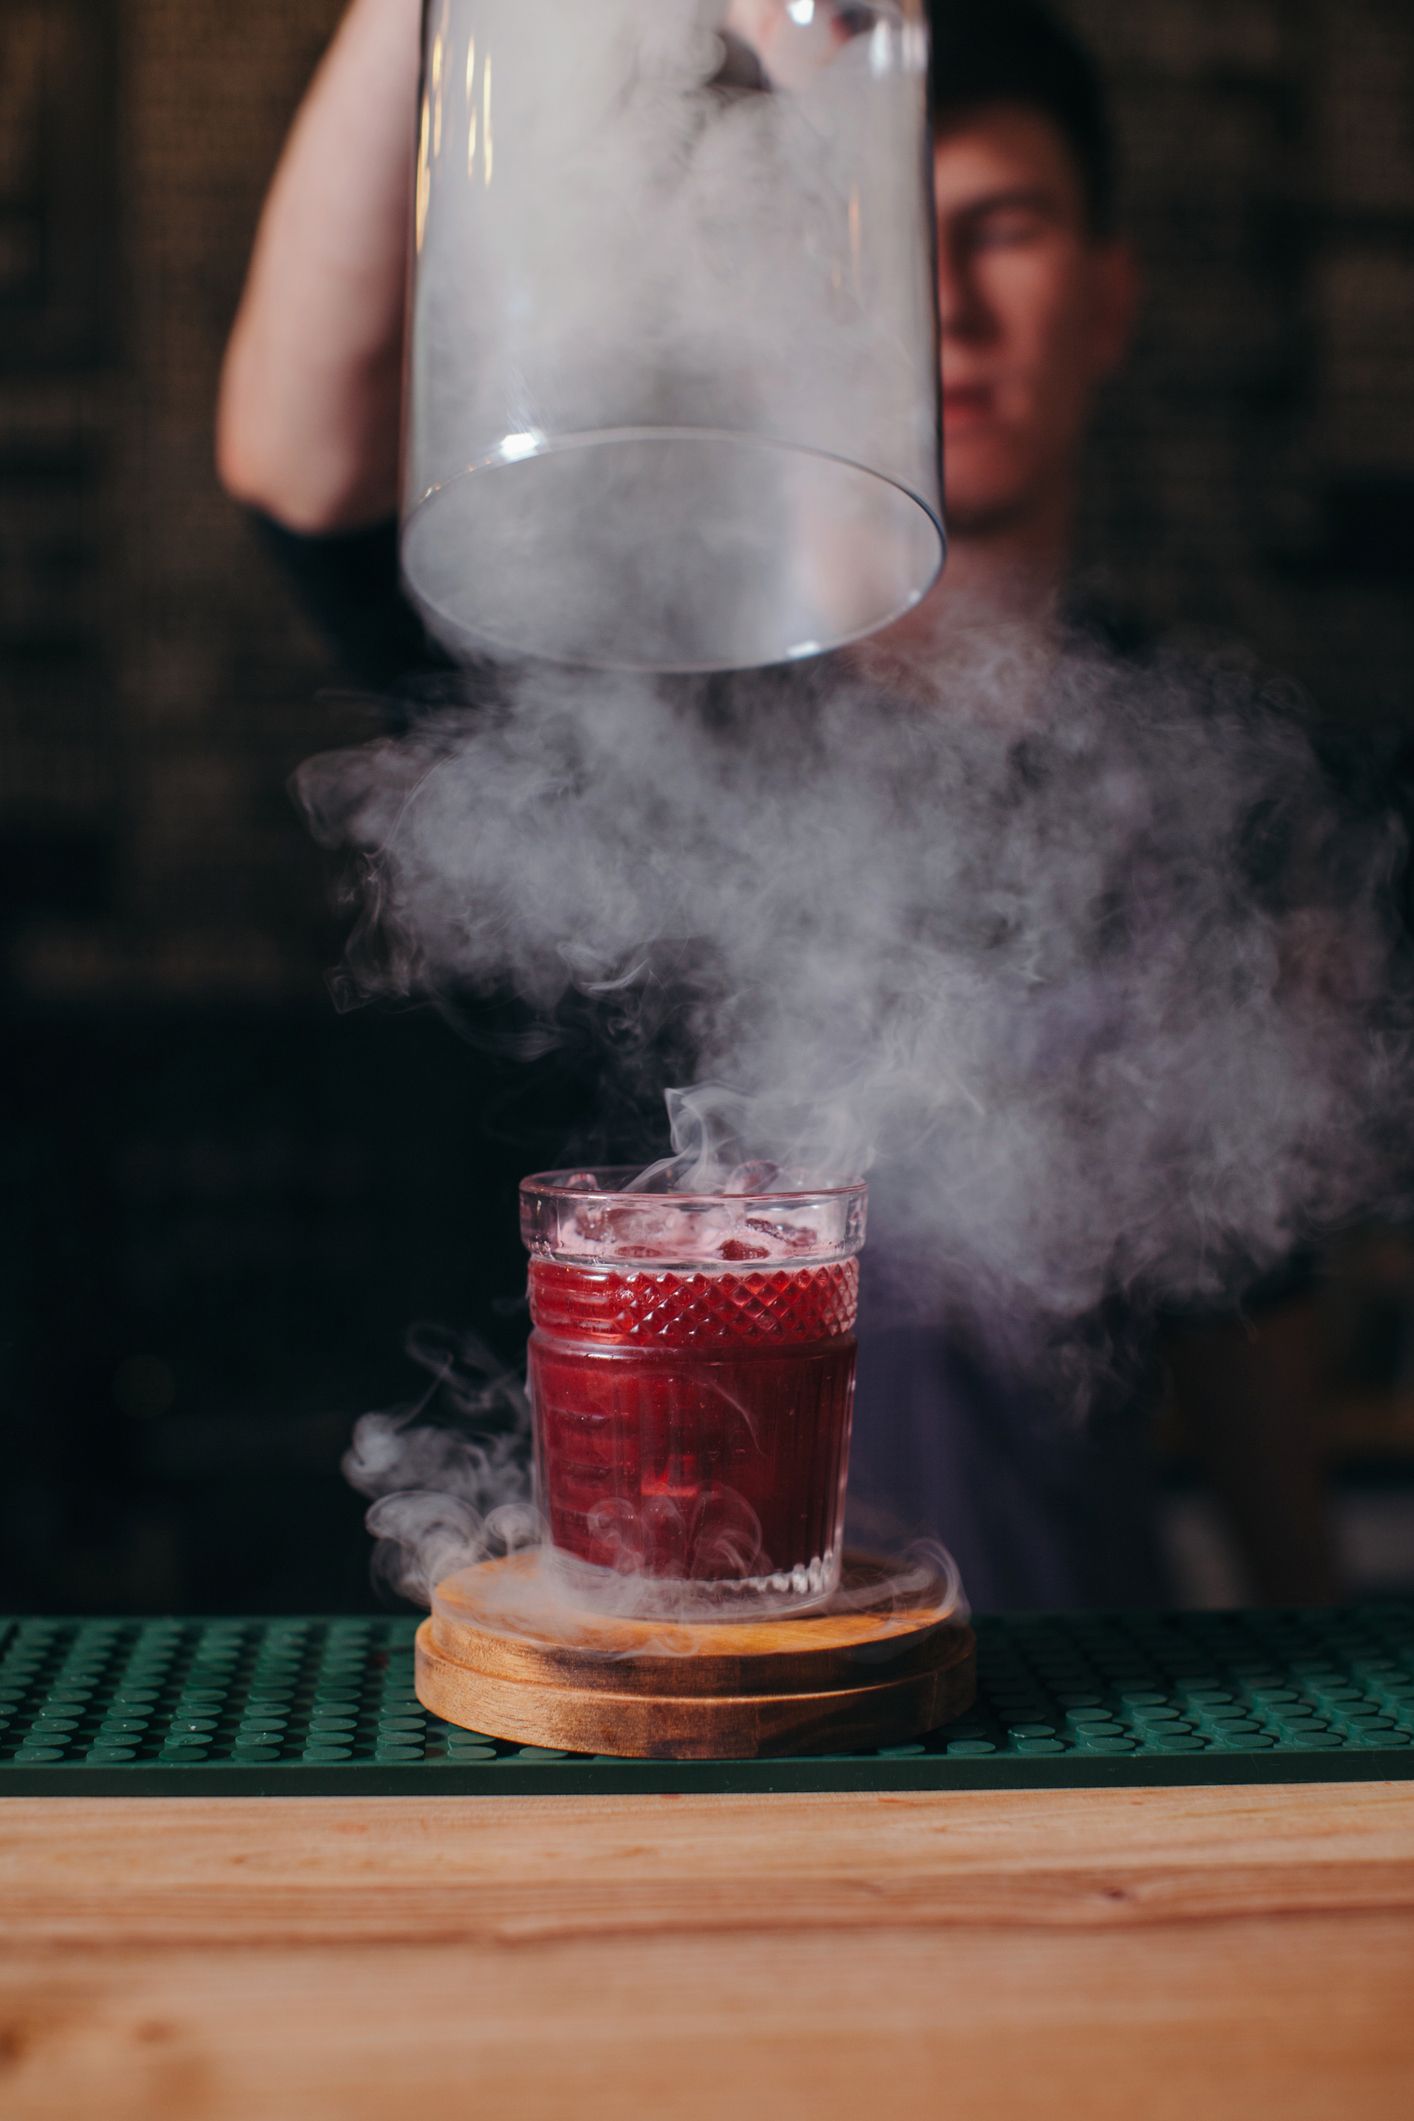 Barman preparing a smoky cocktail